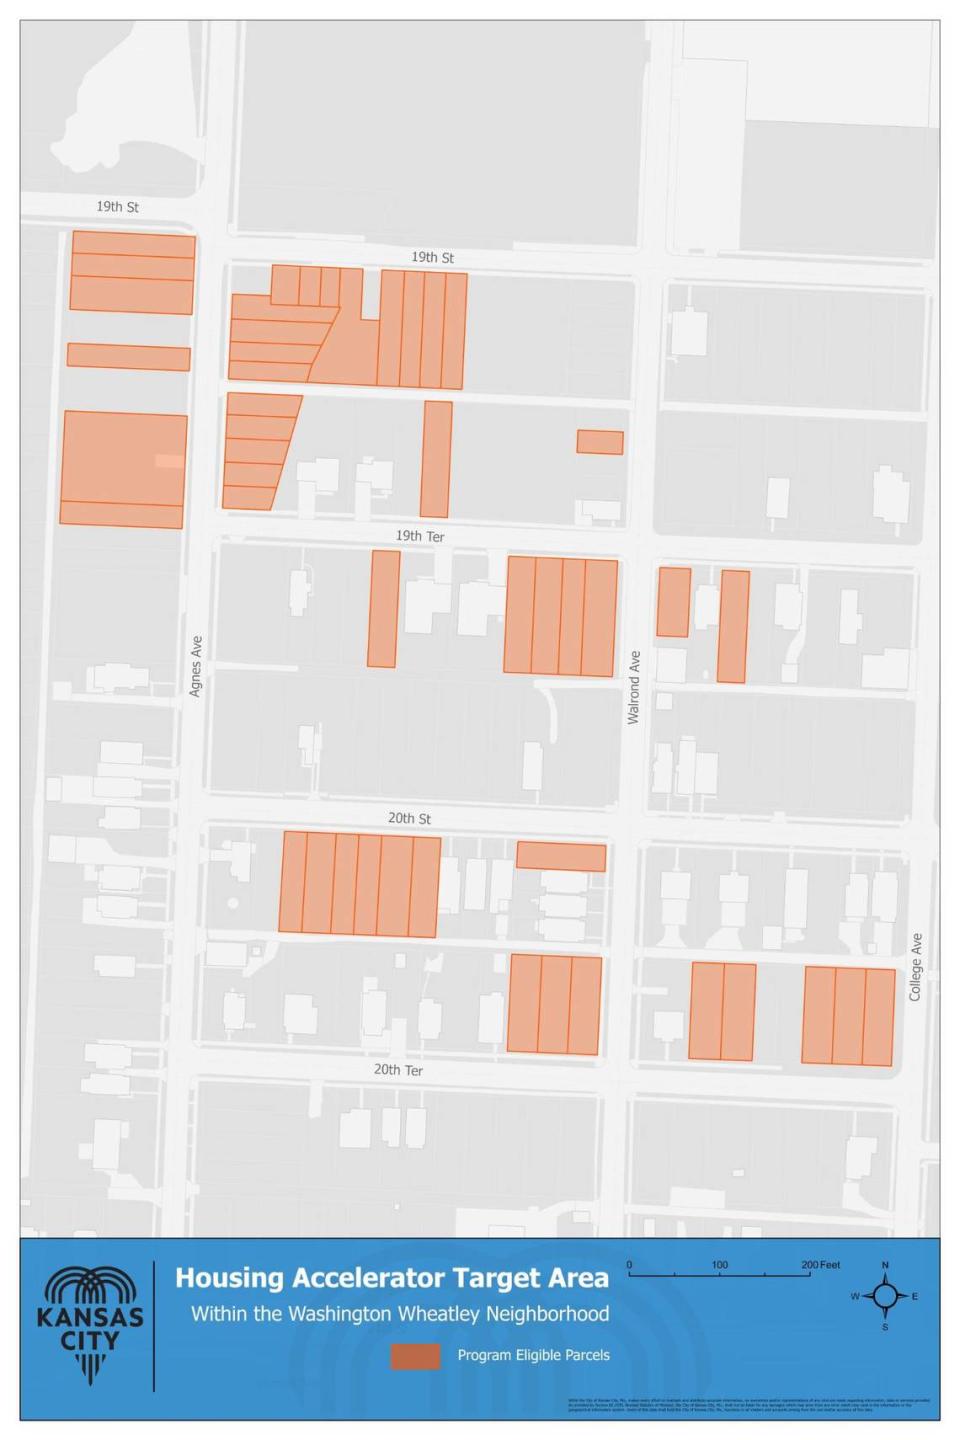 Kansas City’s program is targeting a six-block area of the Washington Wheatley neighborhood.